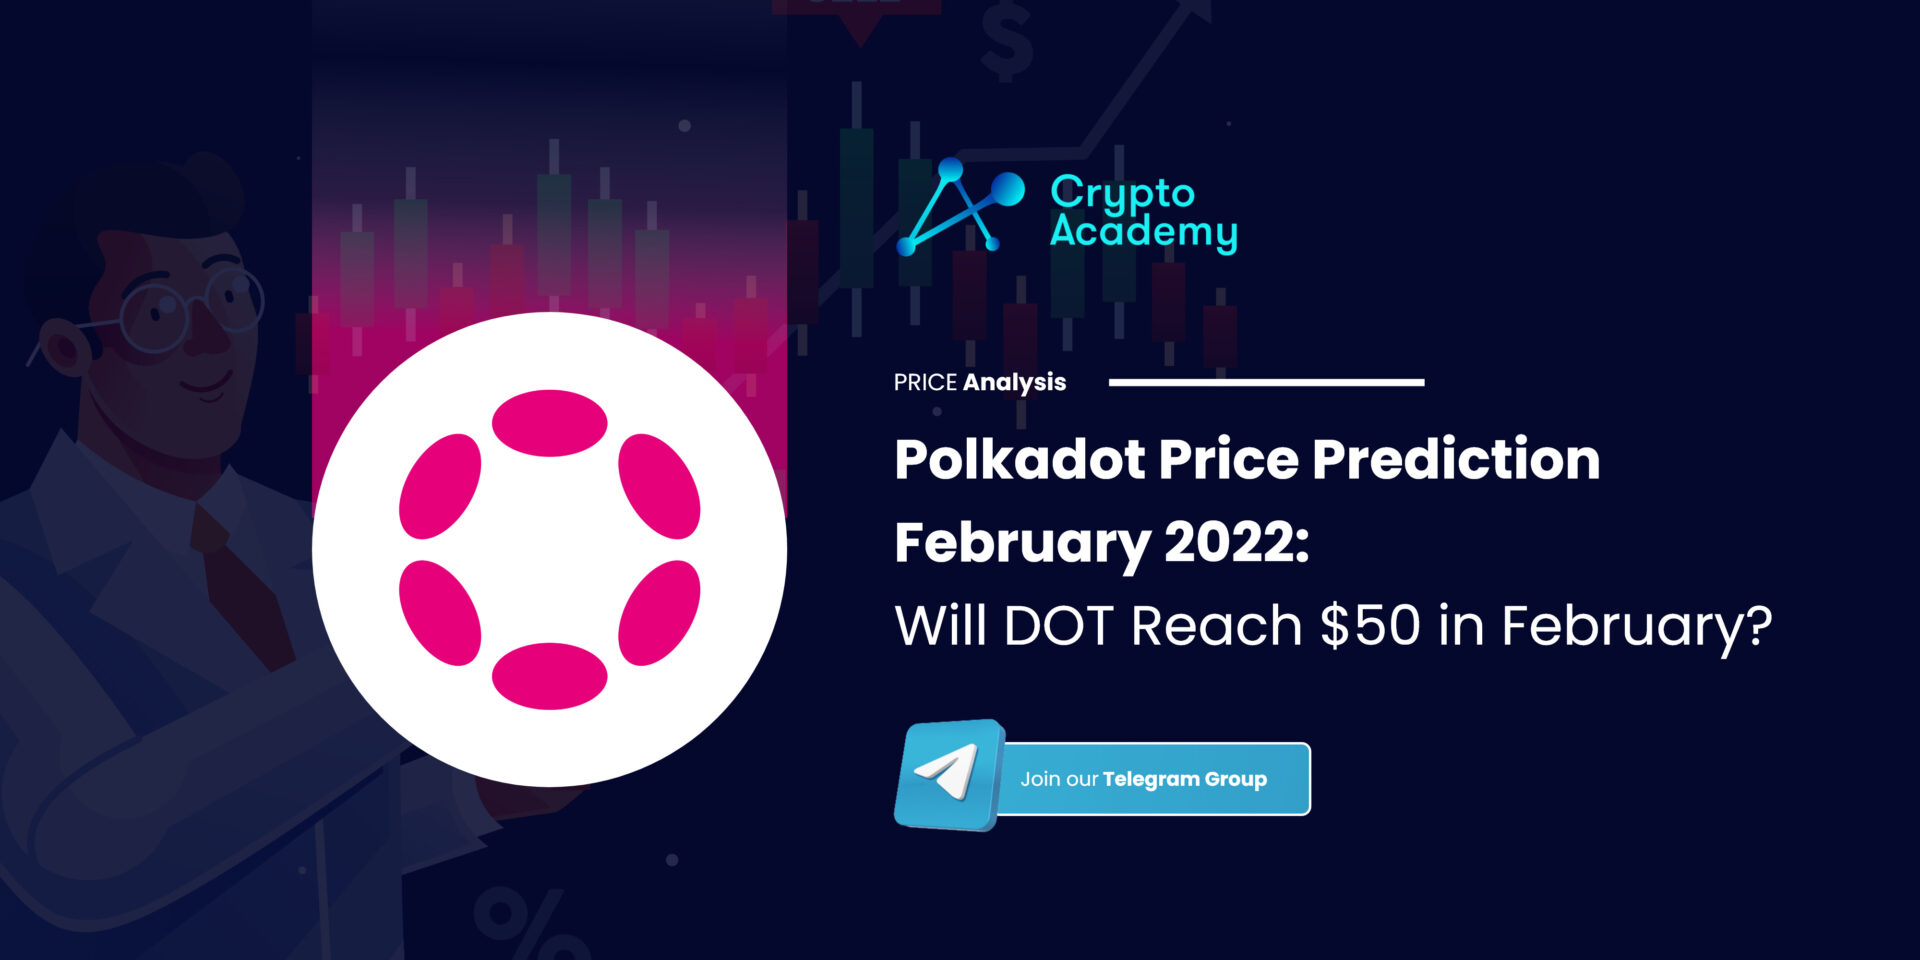 Polkadot Price Prediction February 2022: Will DOT Reach $50 in February?